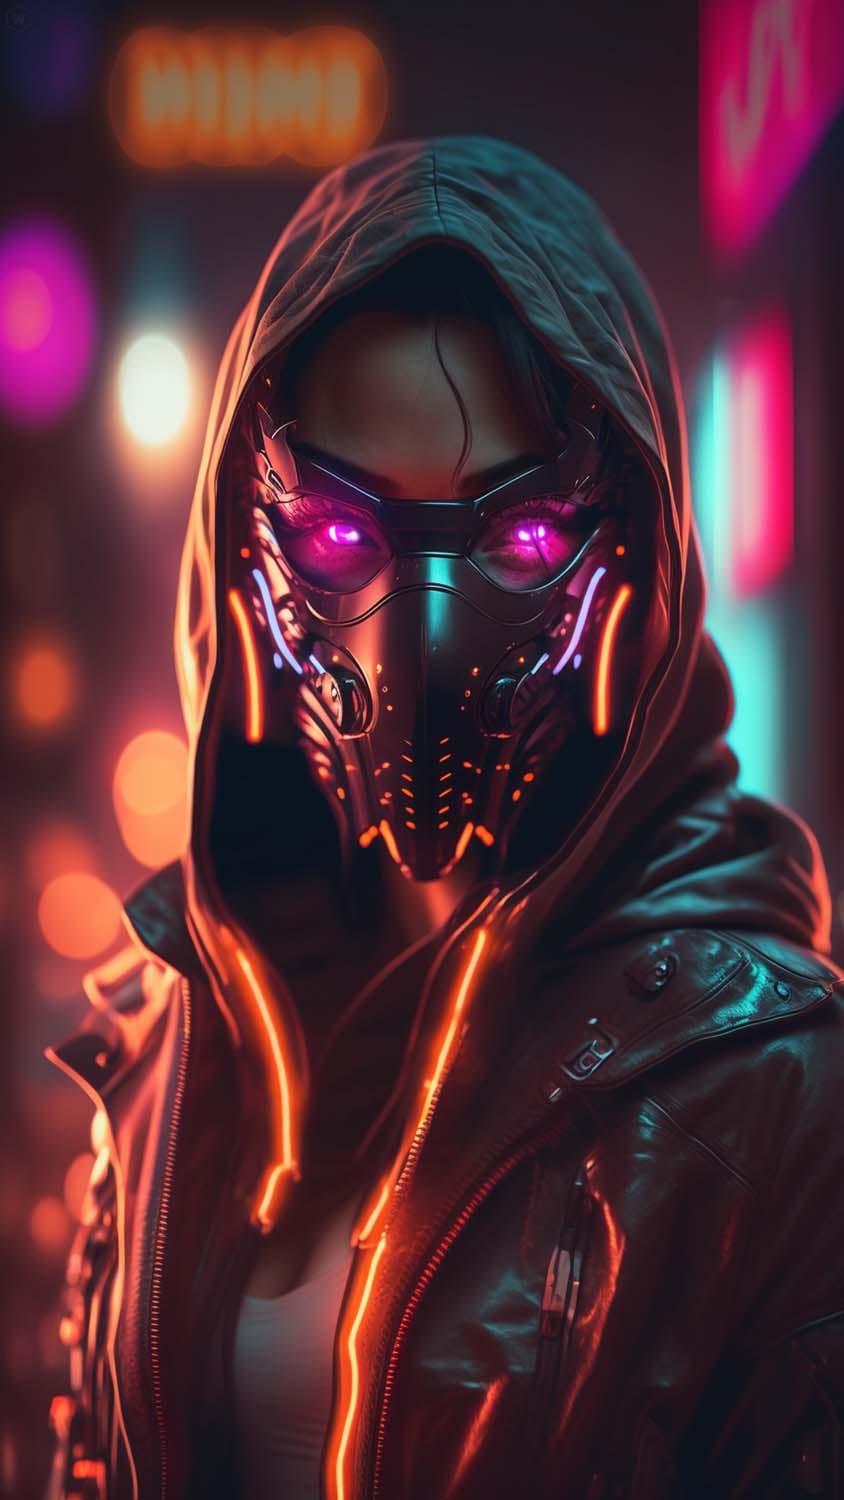 Cyborg Mask Hoodie Girl iPhone Wallpaper HD